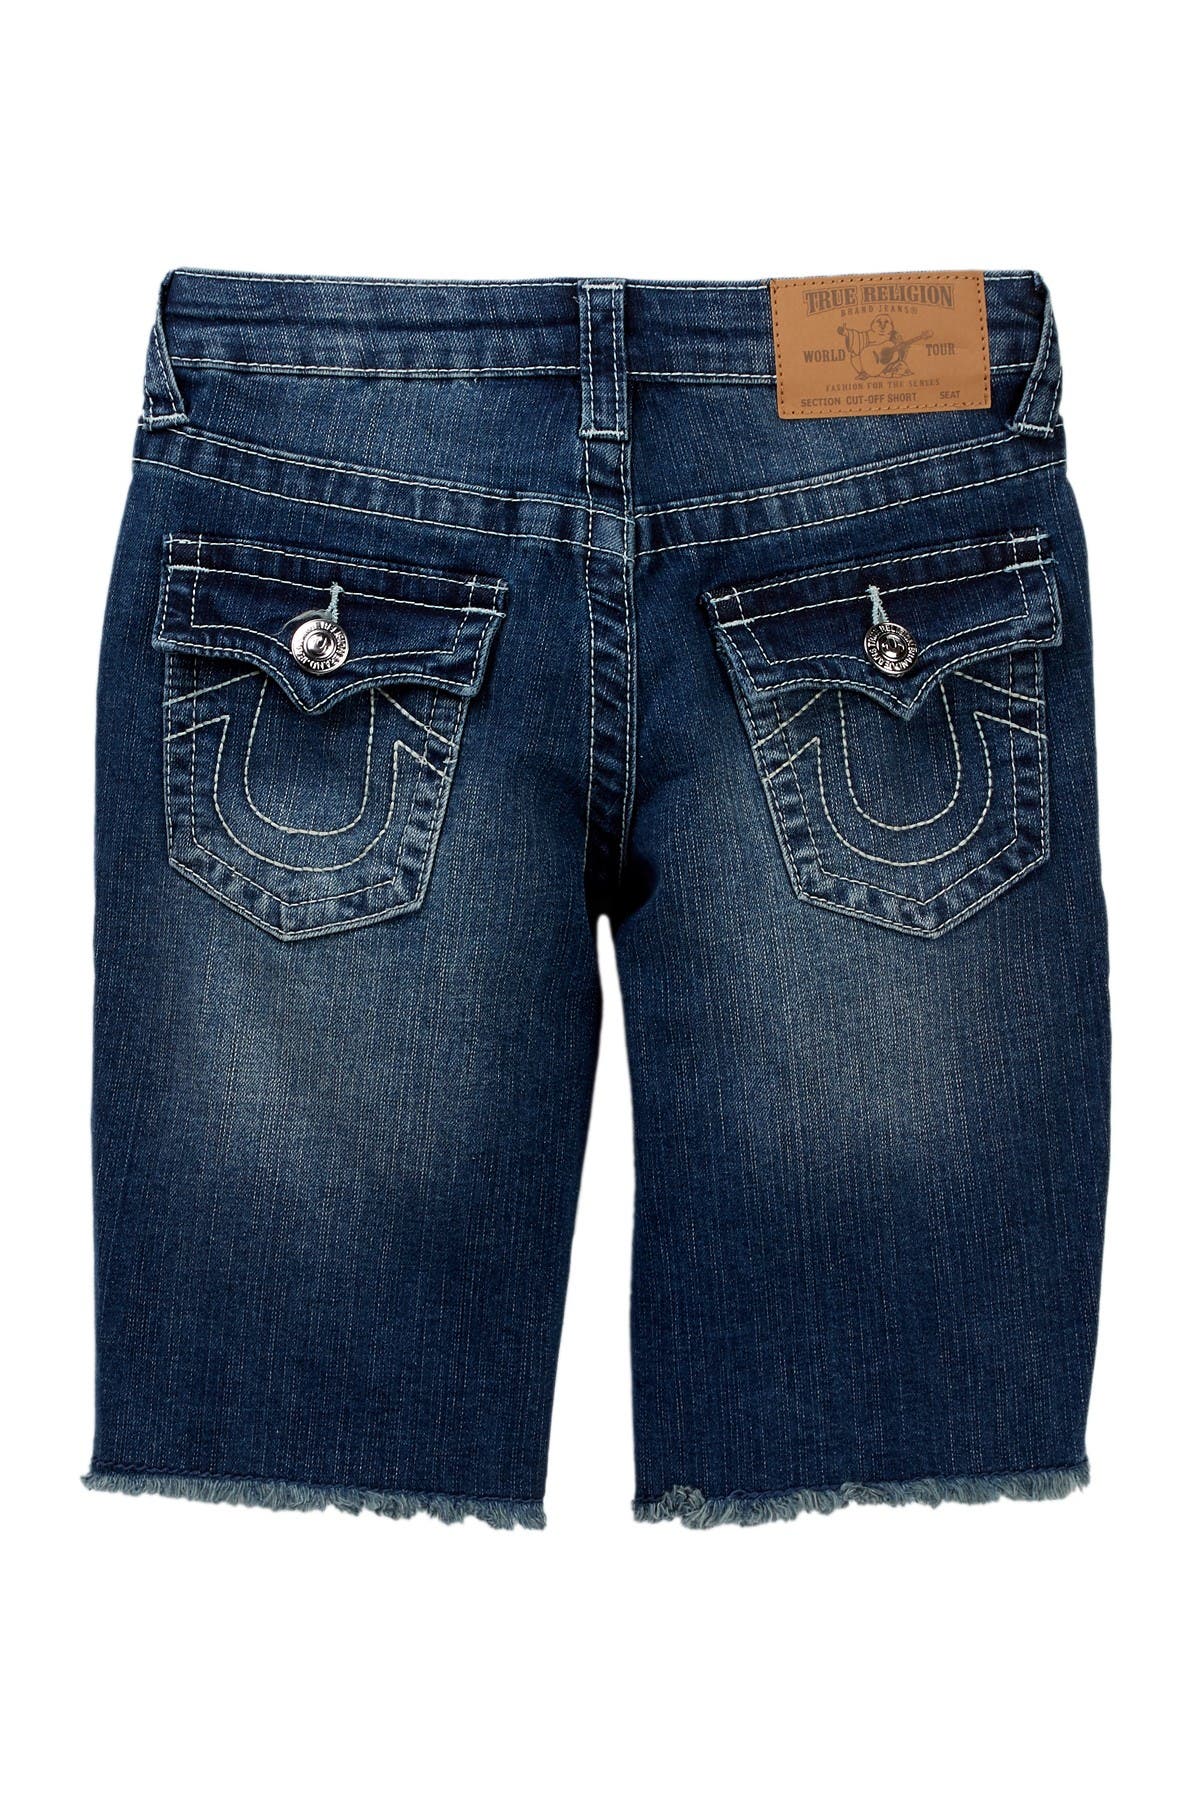 nordstrom rack jean shorts